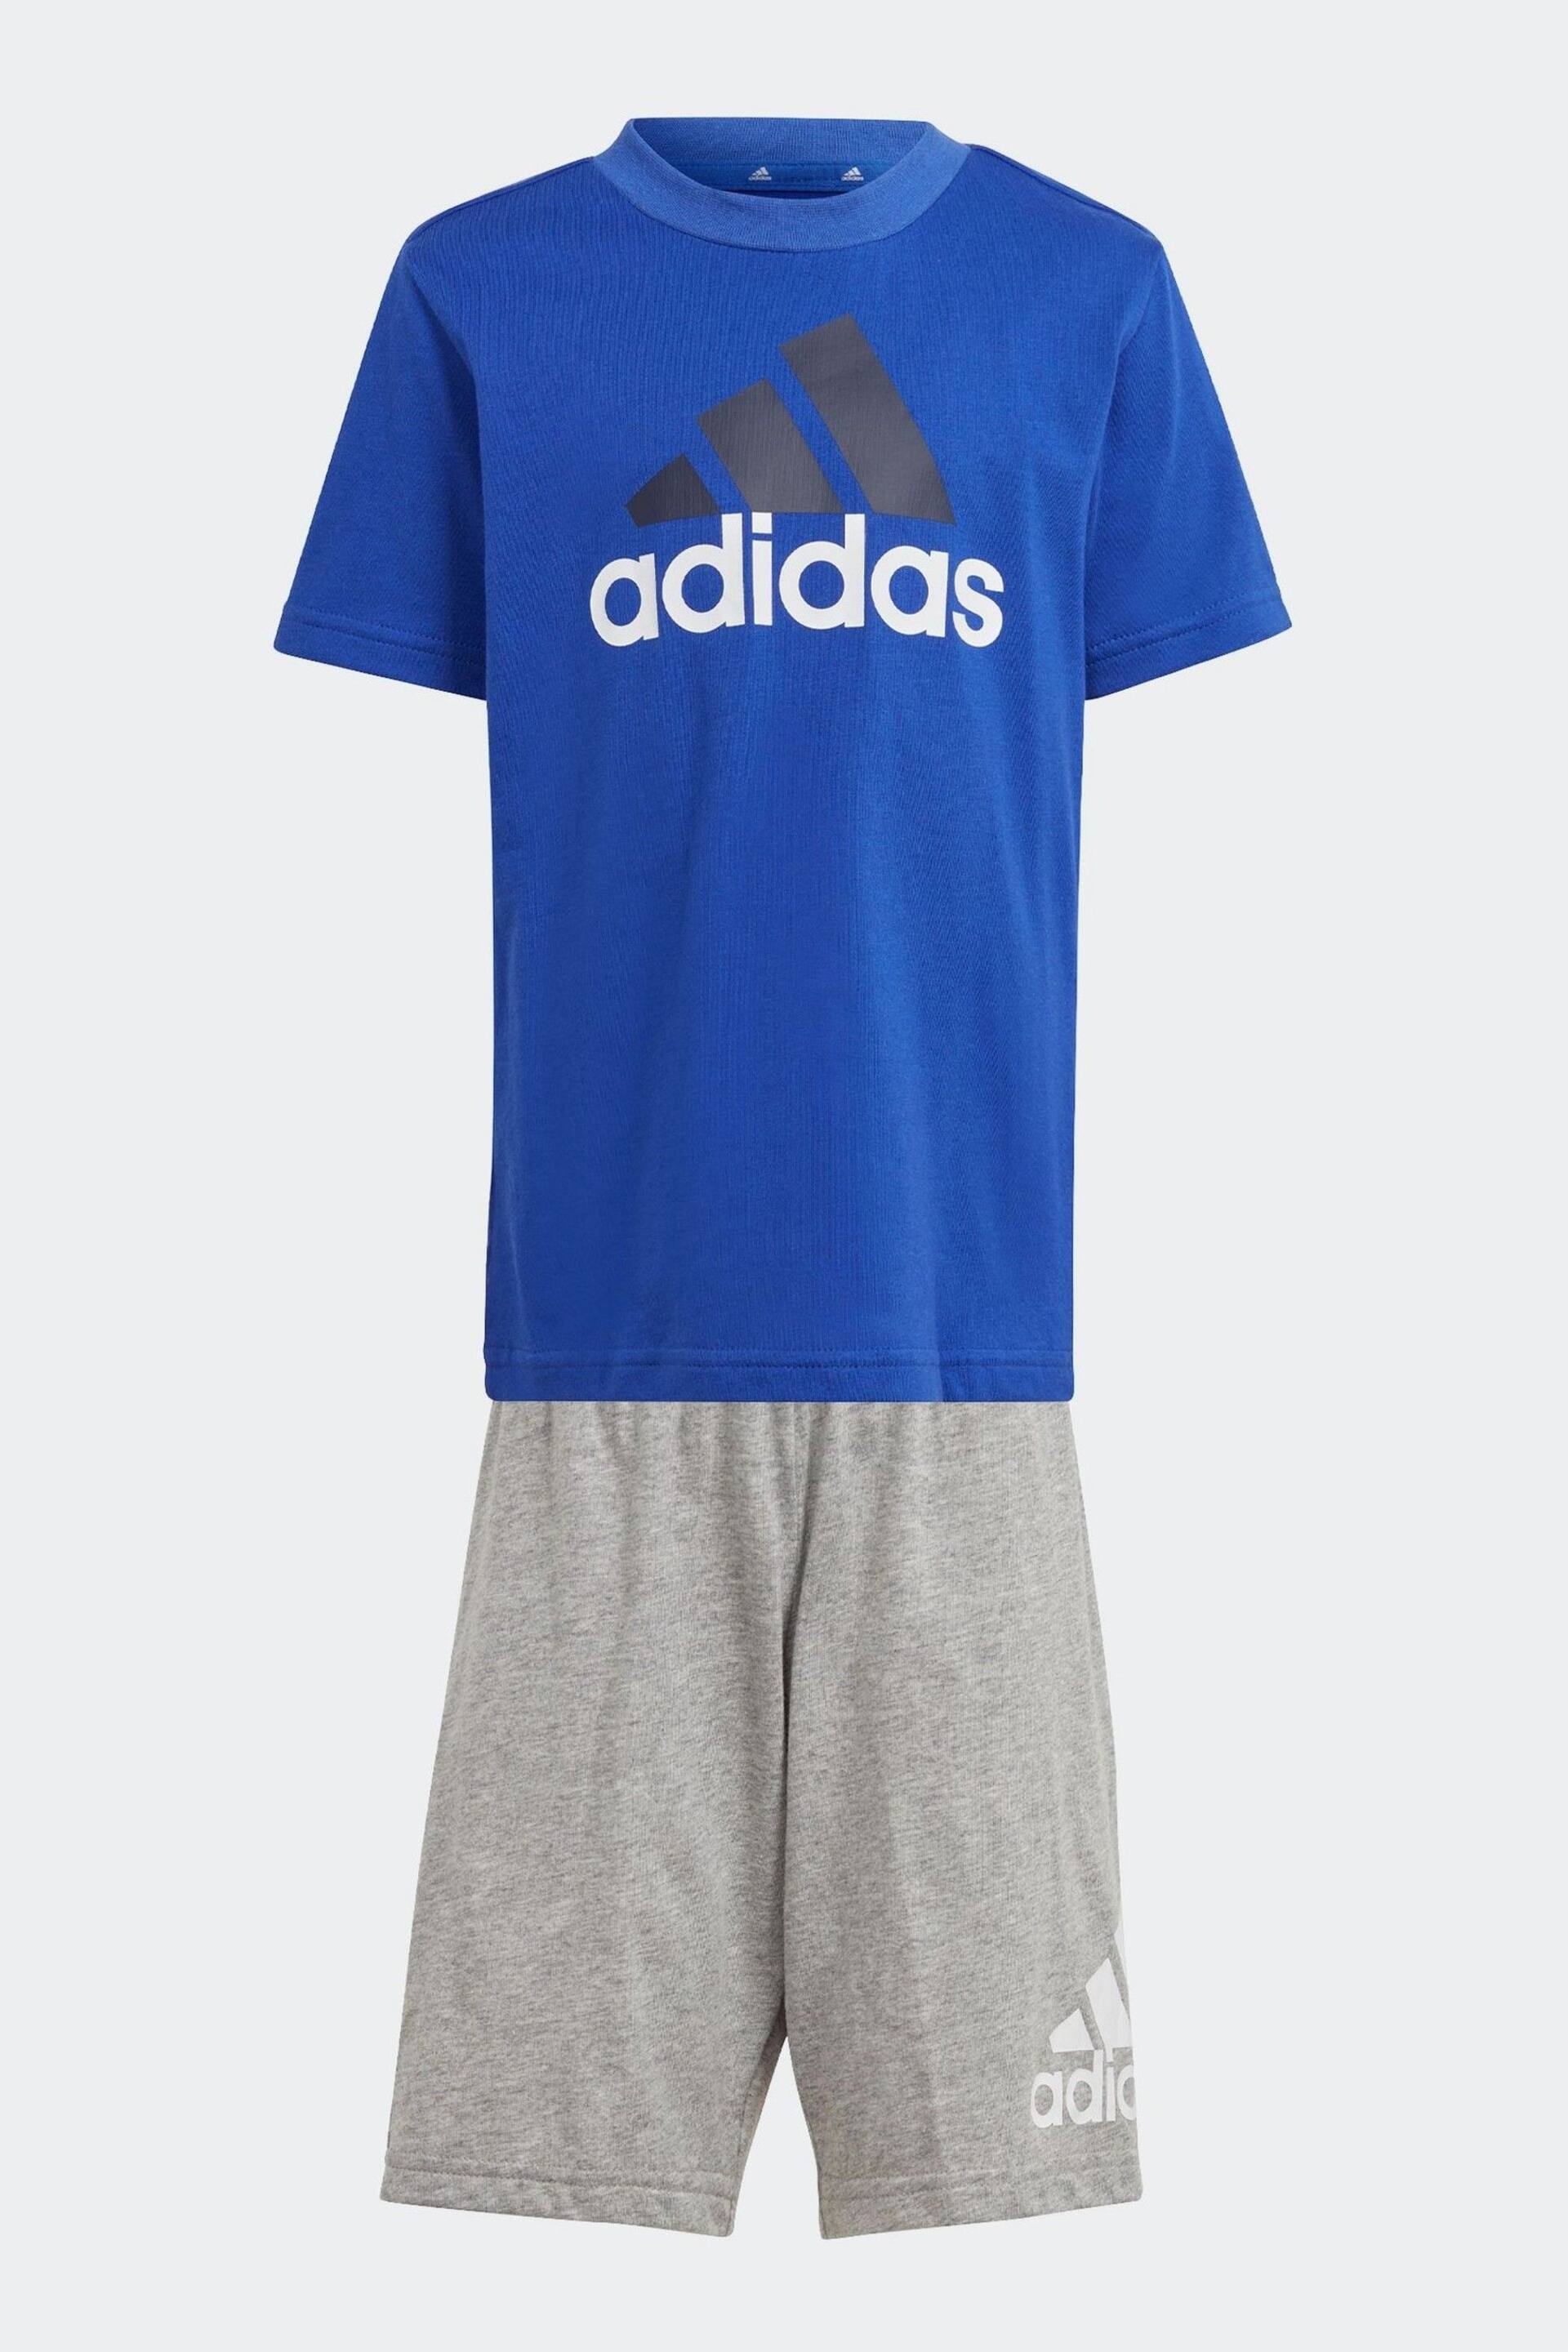 adidas Blue/Grey Kids Essentials Logo T-Shirt and Short Set - Image 1 of 6